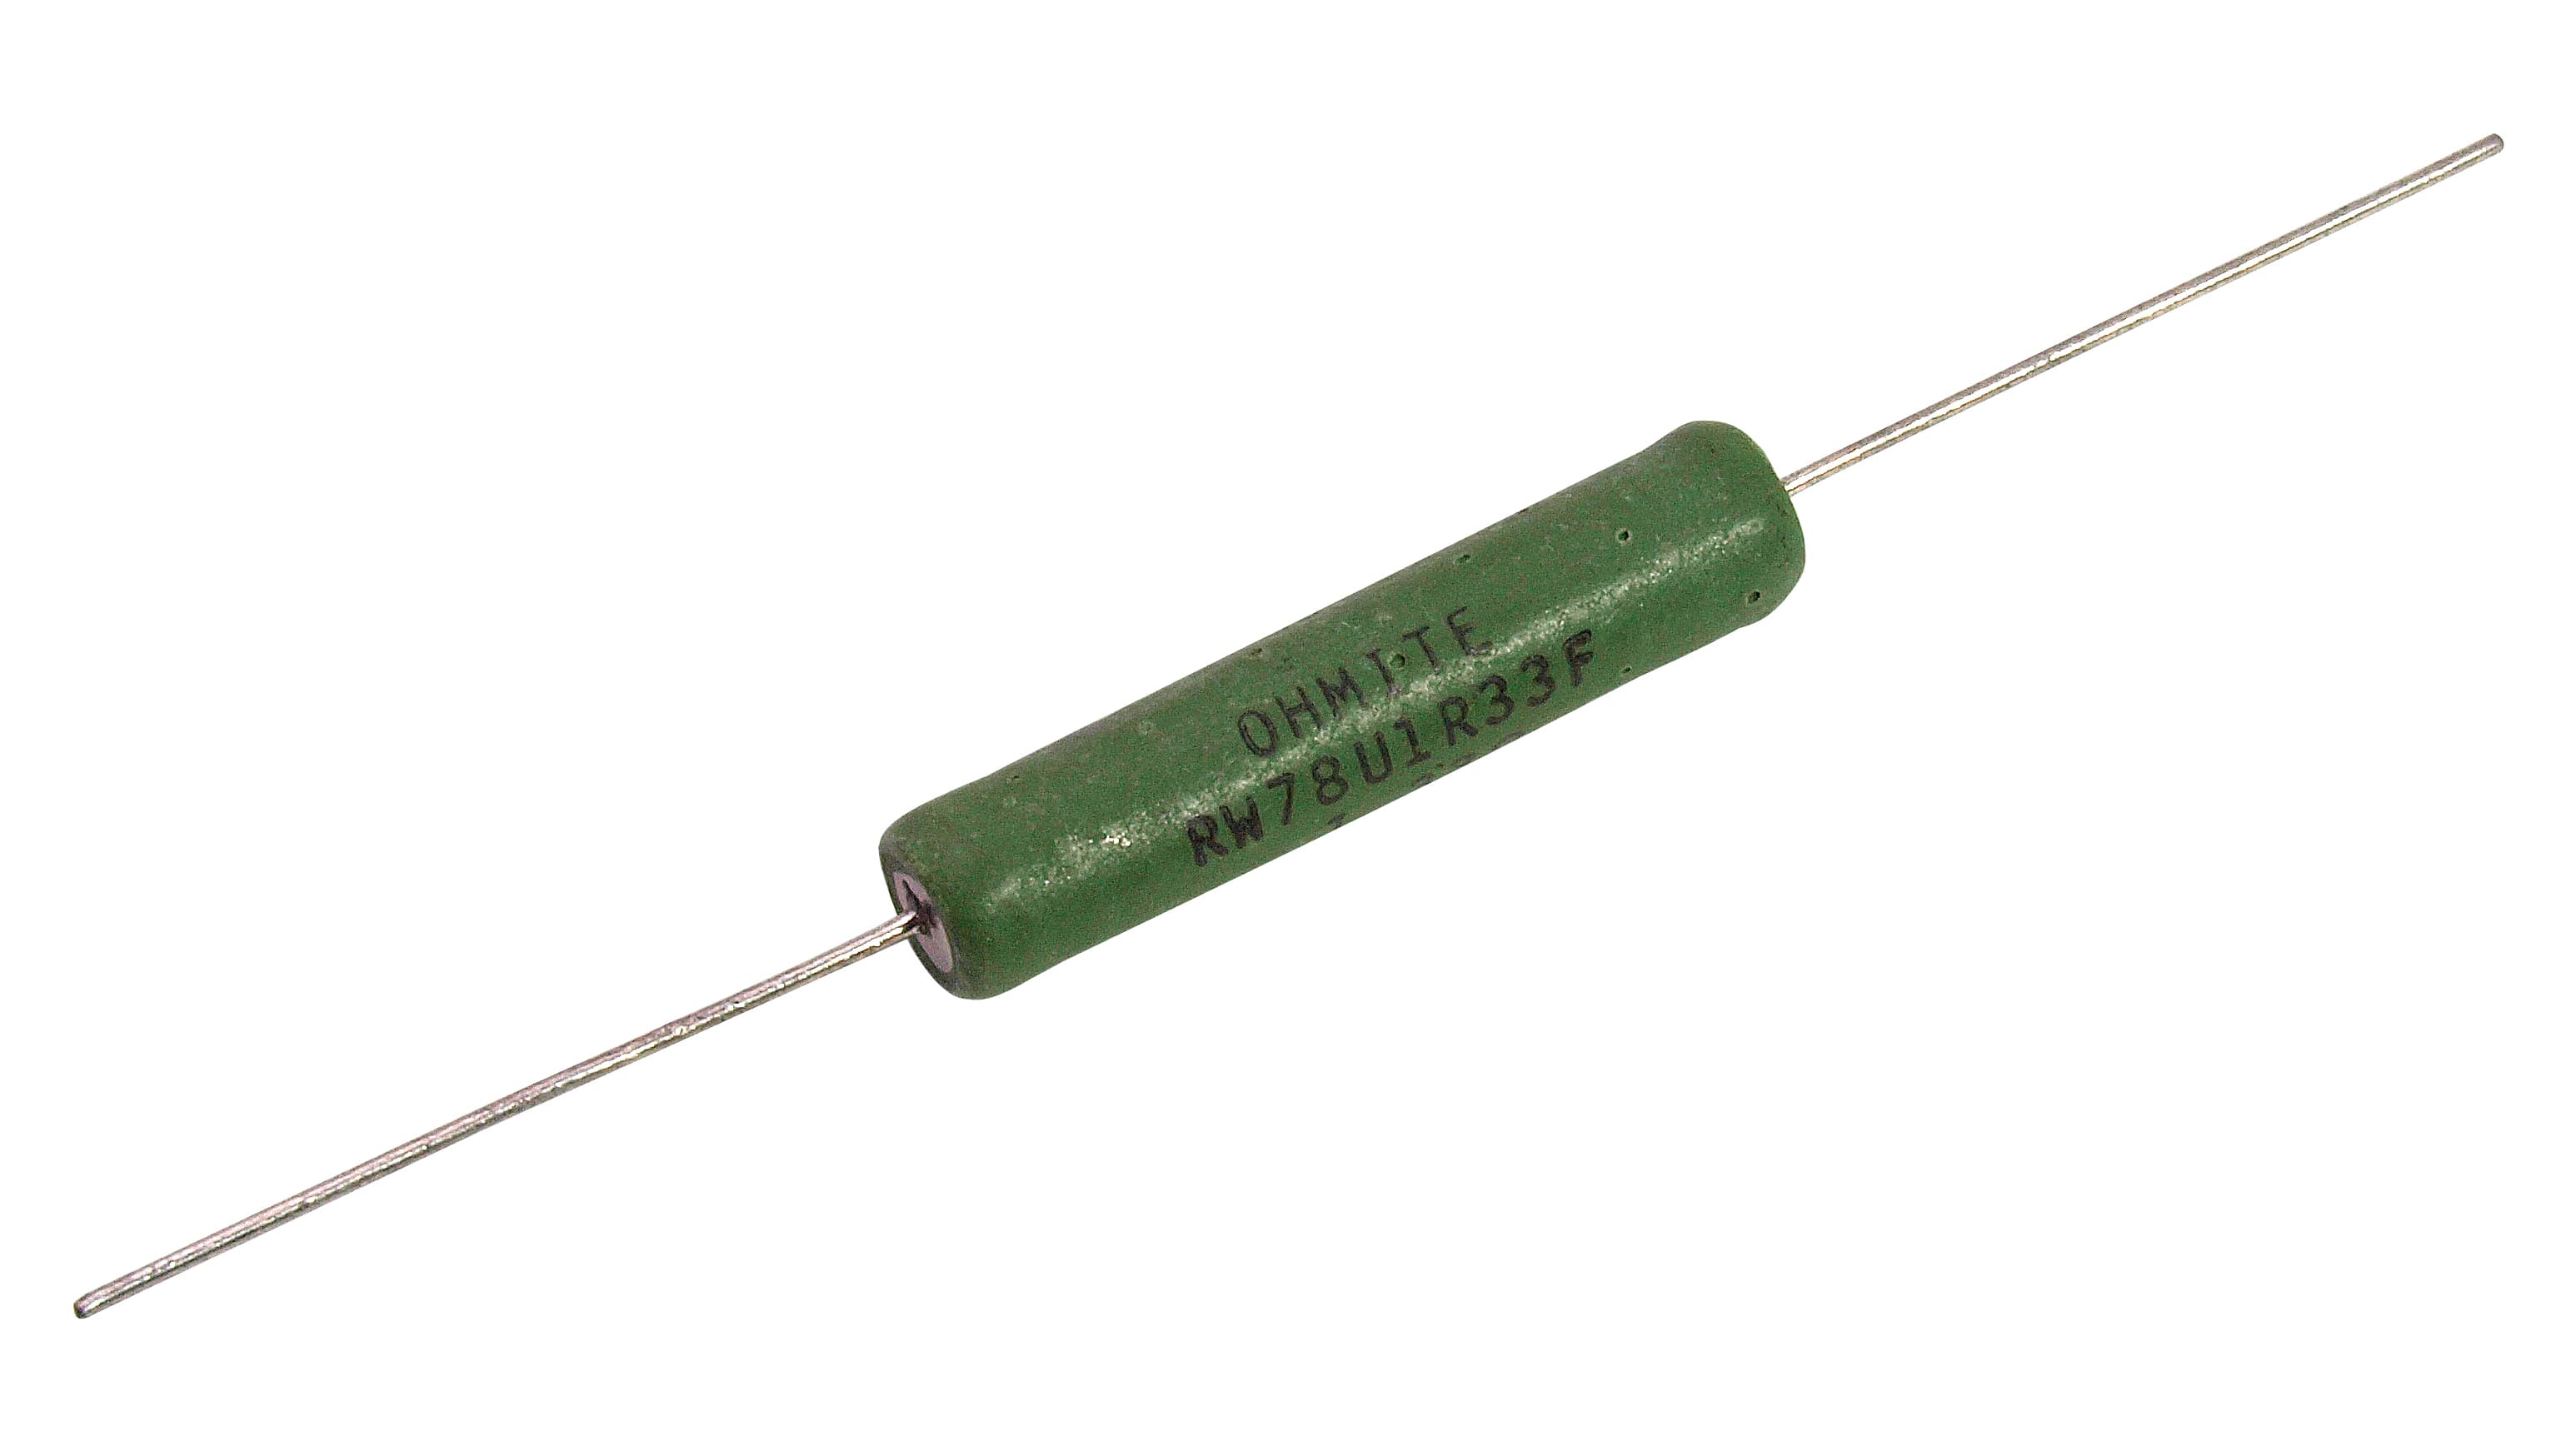 5 Pack TRW BWH Molded Wirewound .68 OHM 1 Watt 10% Resistors NOS 1 